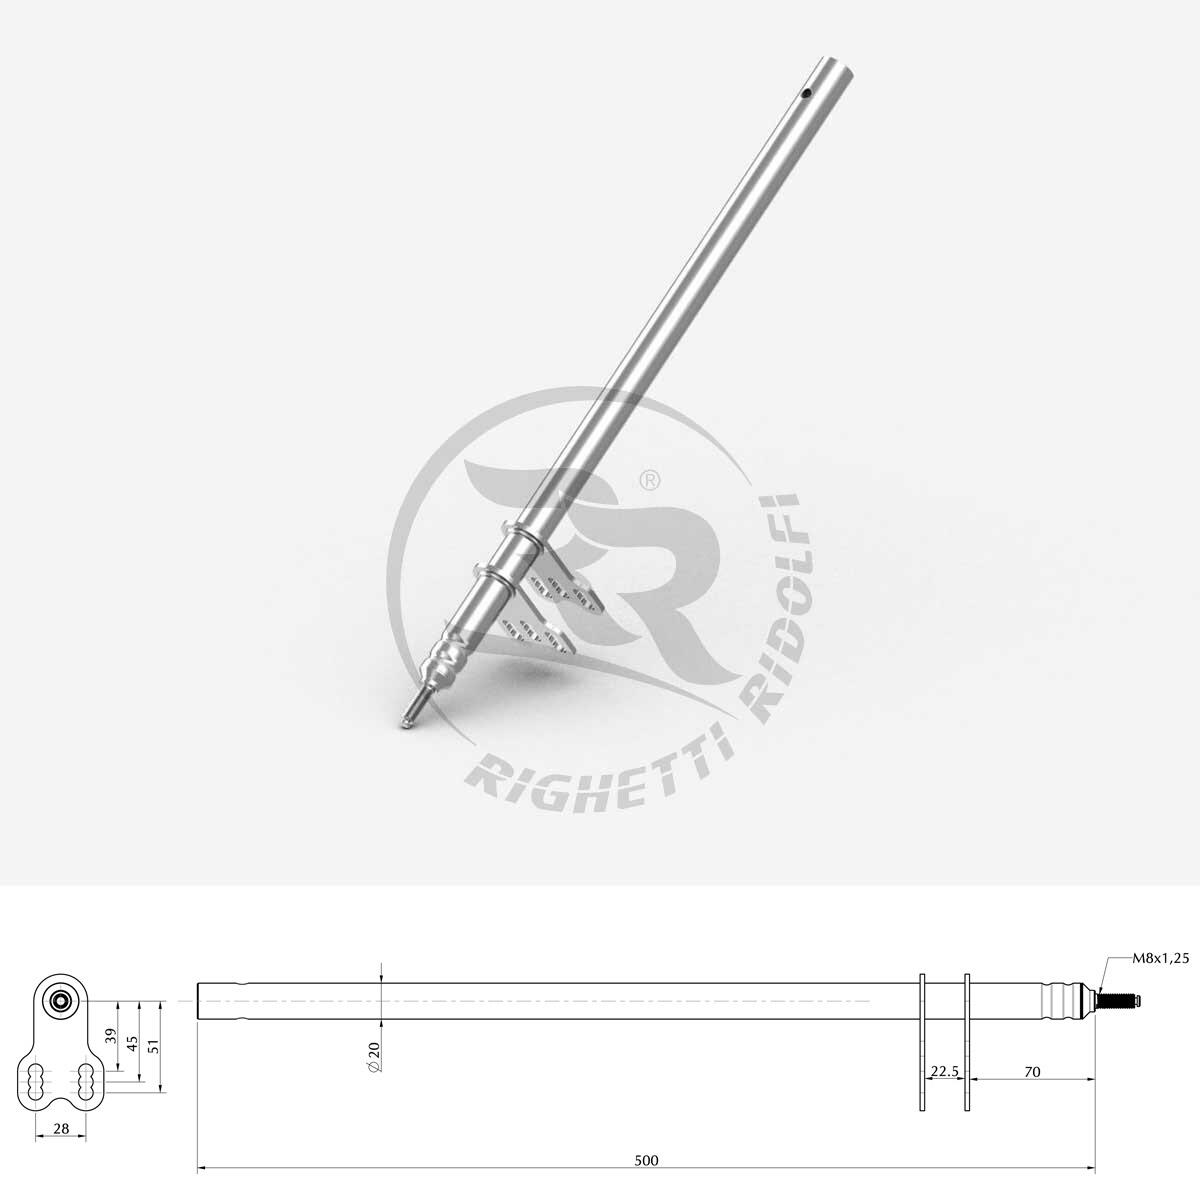 ART / Birel Steering Shaft - Righetti